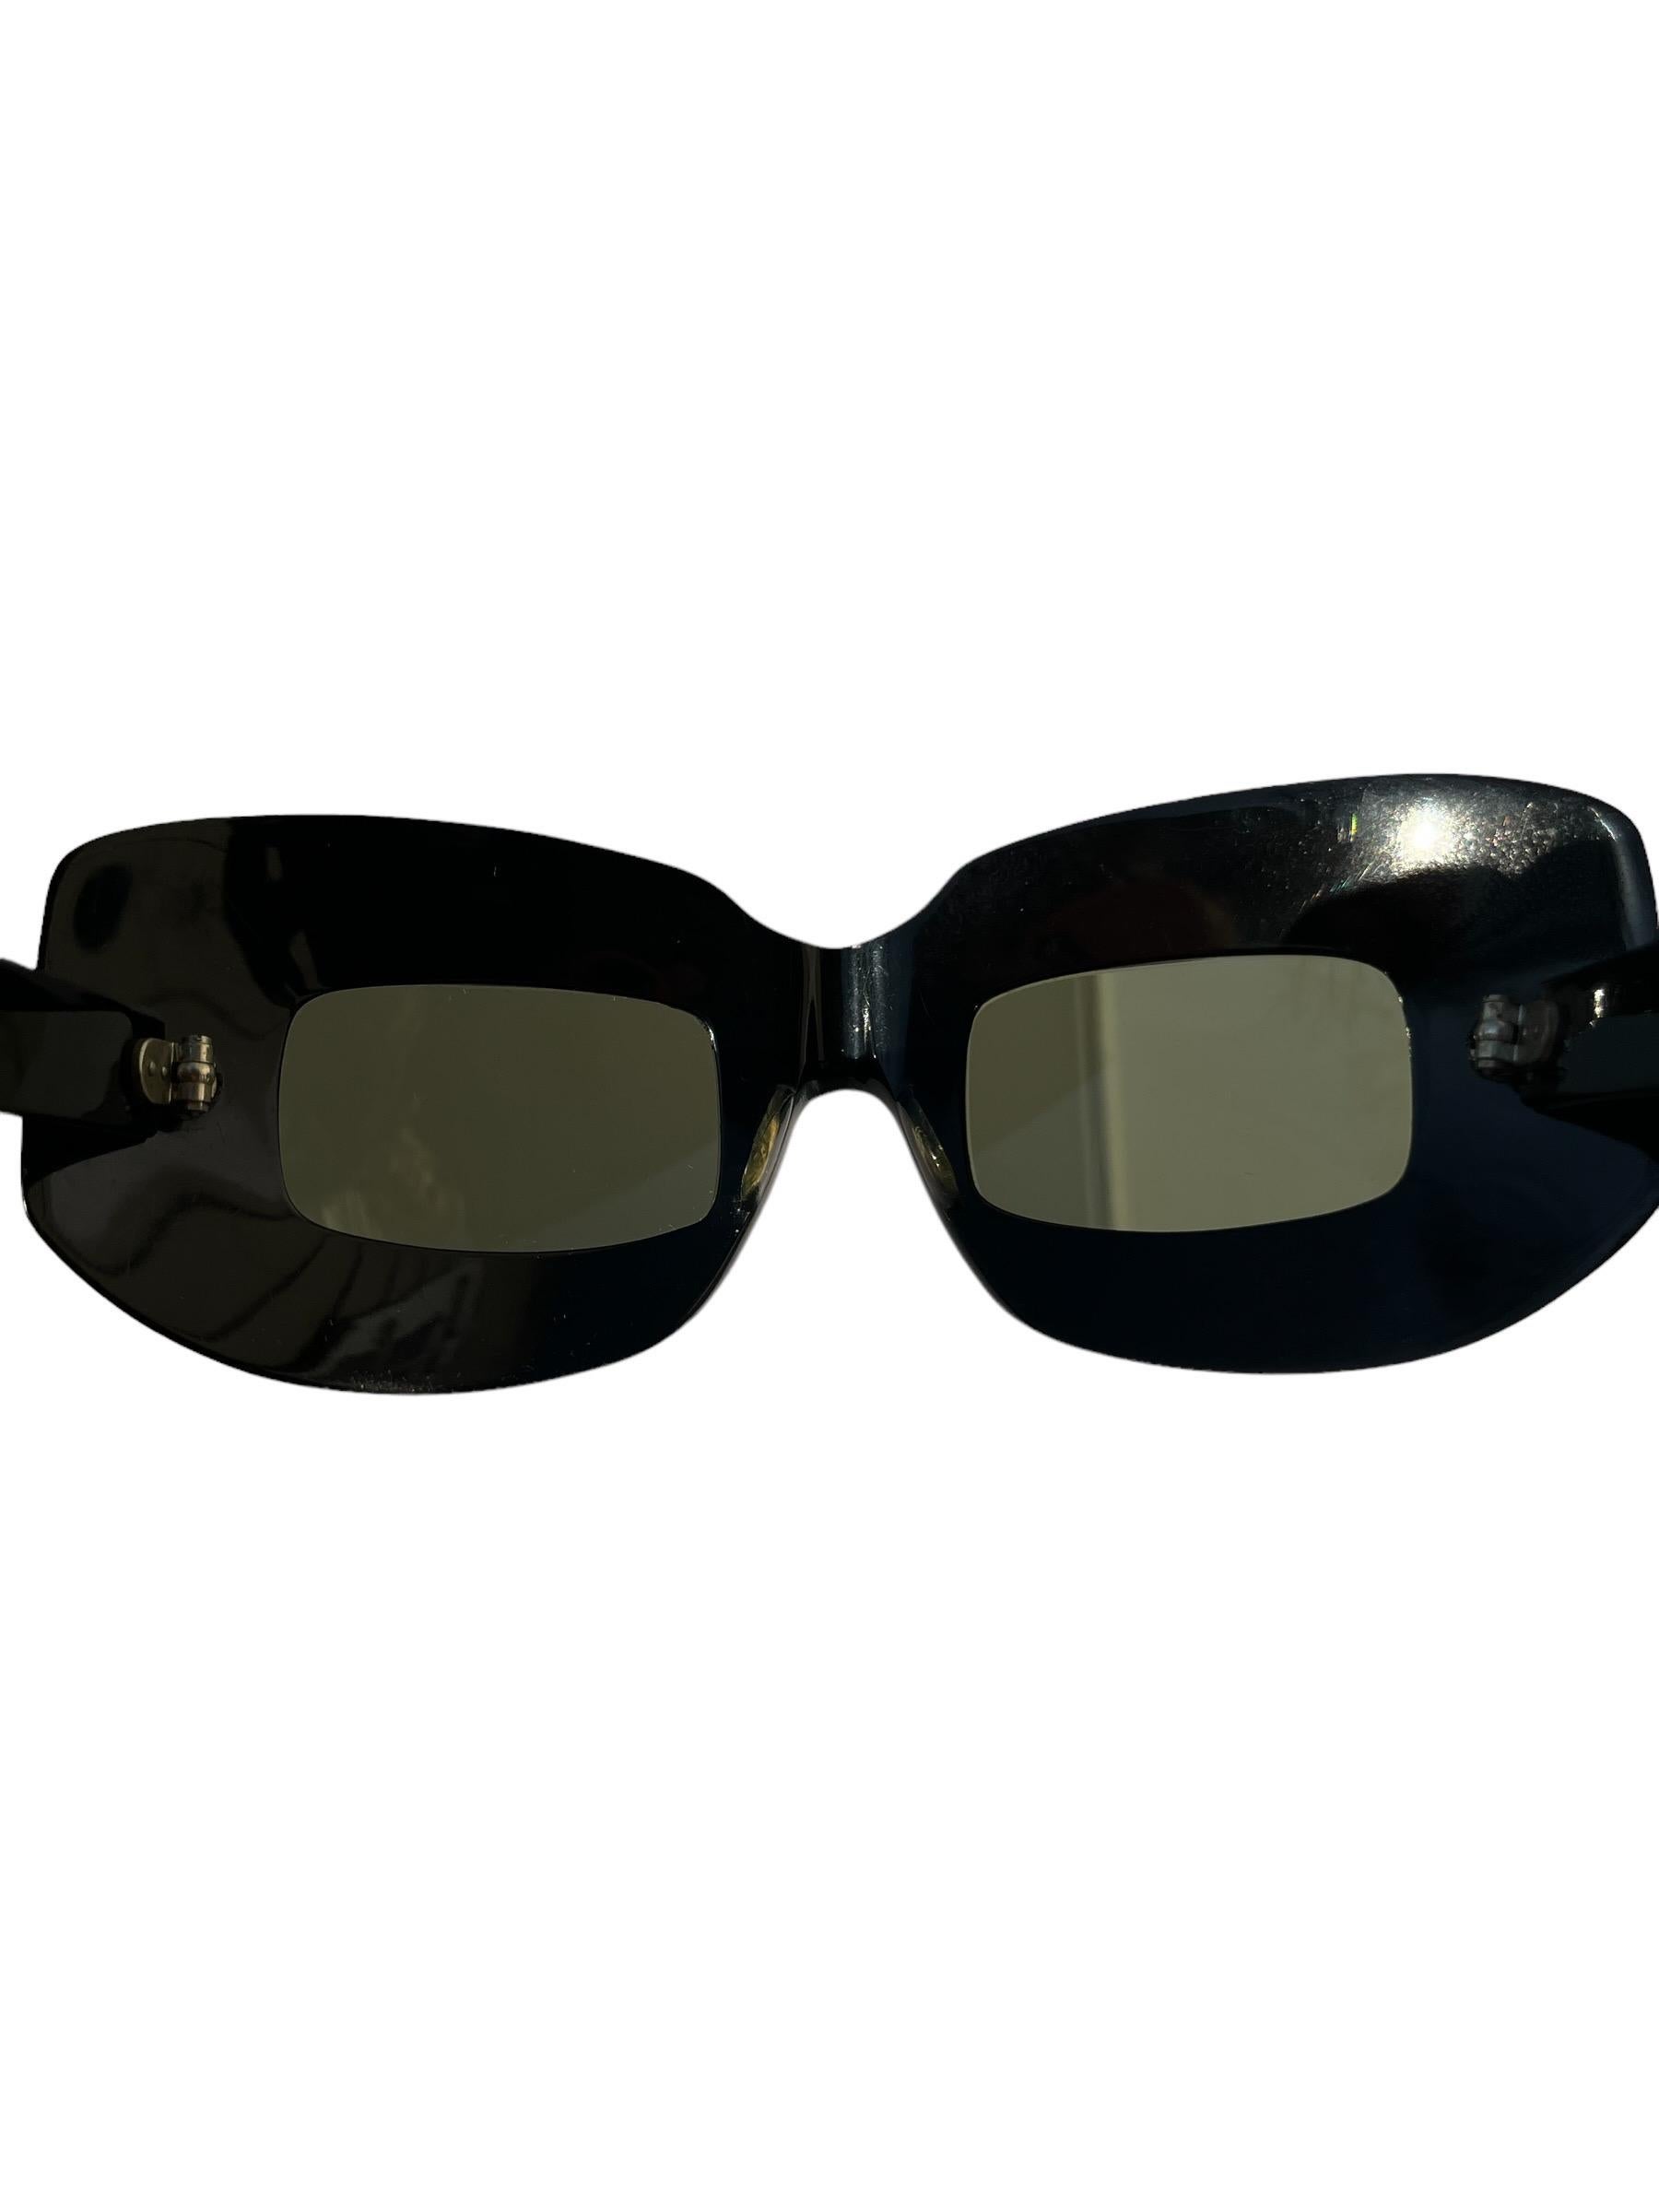 Vintage 1960s Oliver Goldsmith Mod Black Sunglasses  4